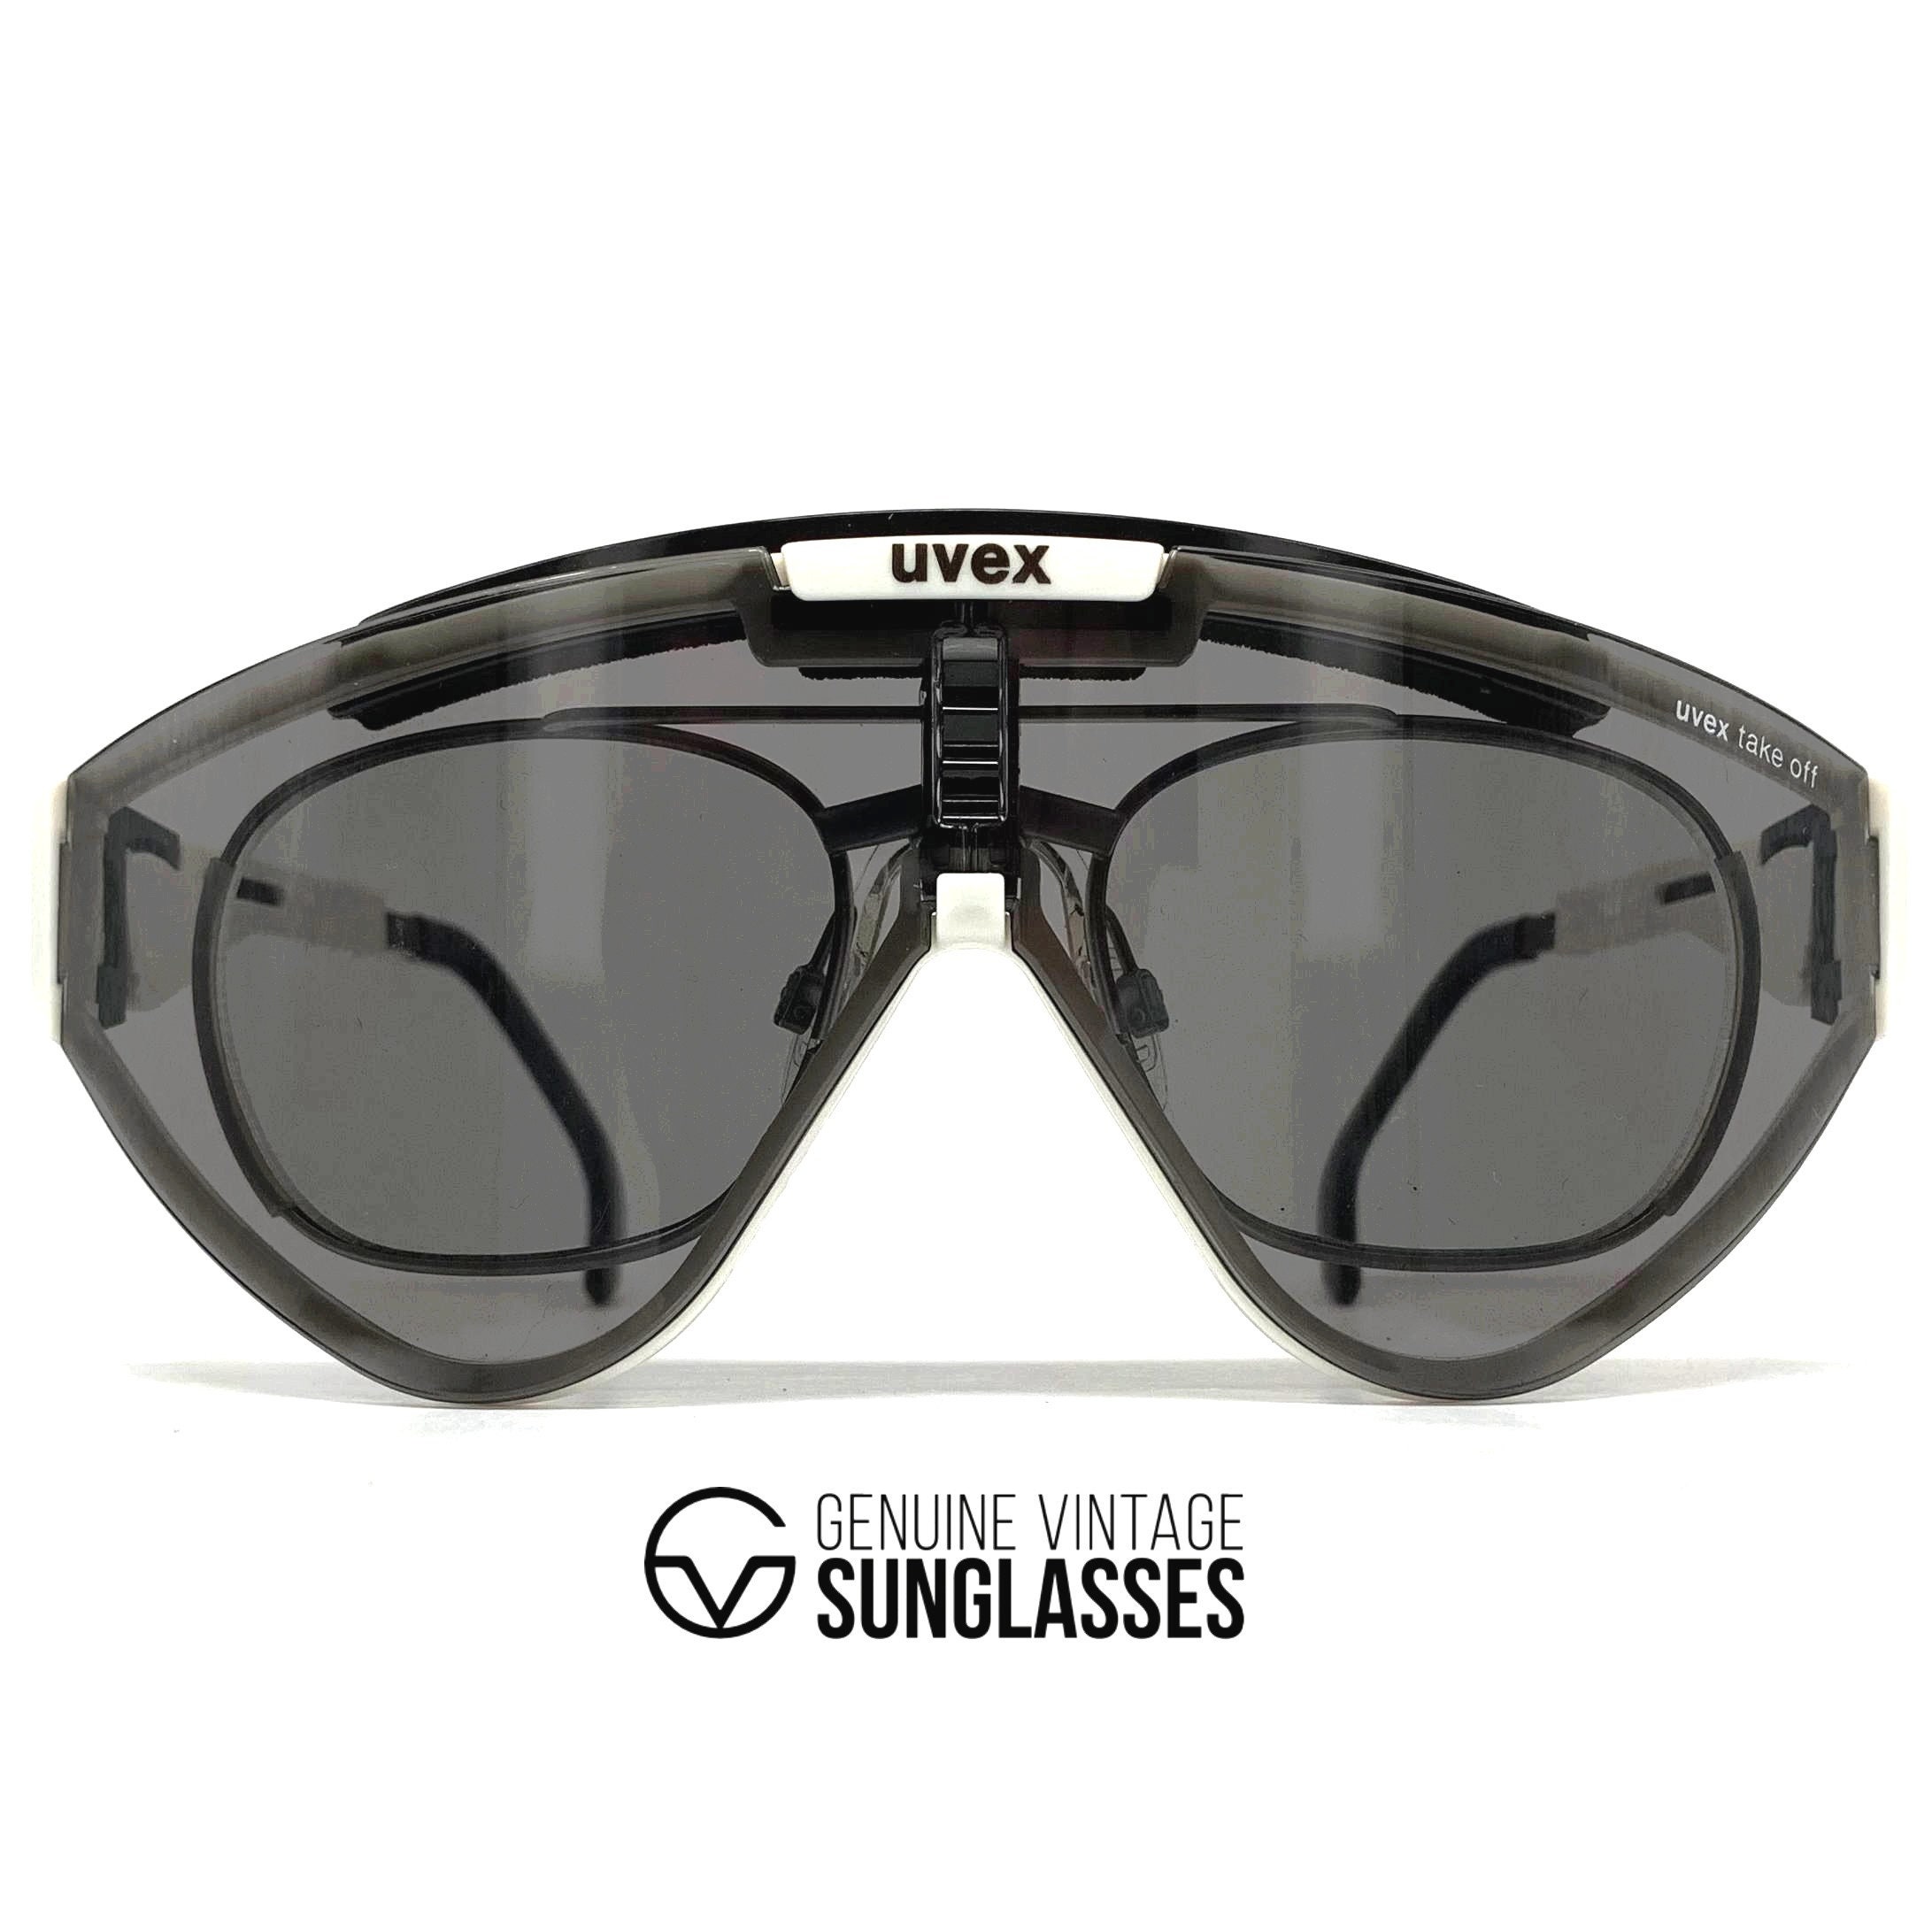 Off-white block UNISEX Glasses - Sucrelyiz Accessories